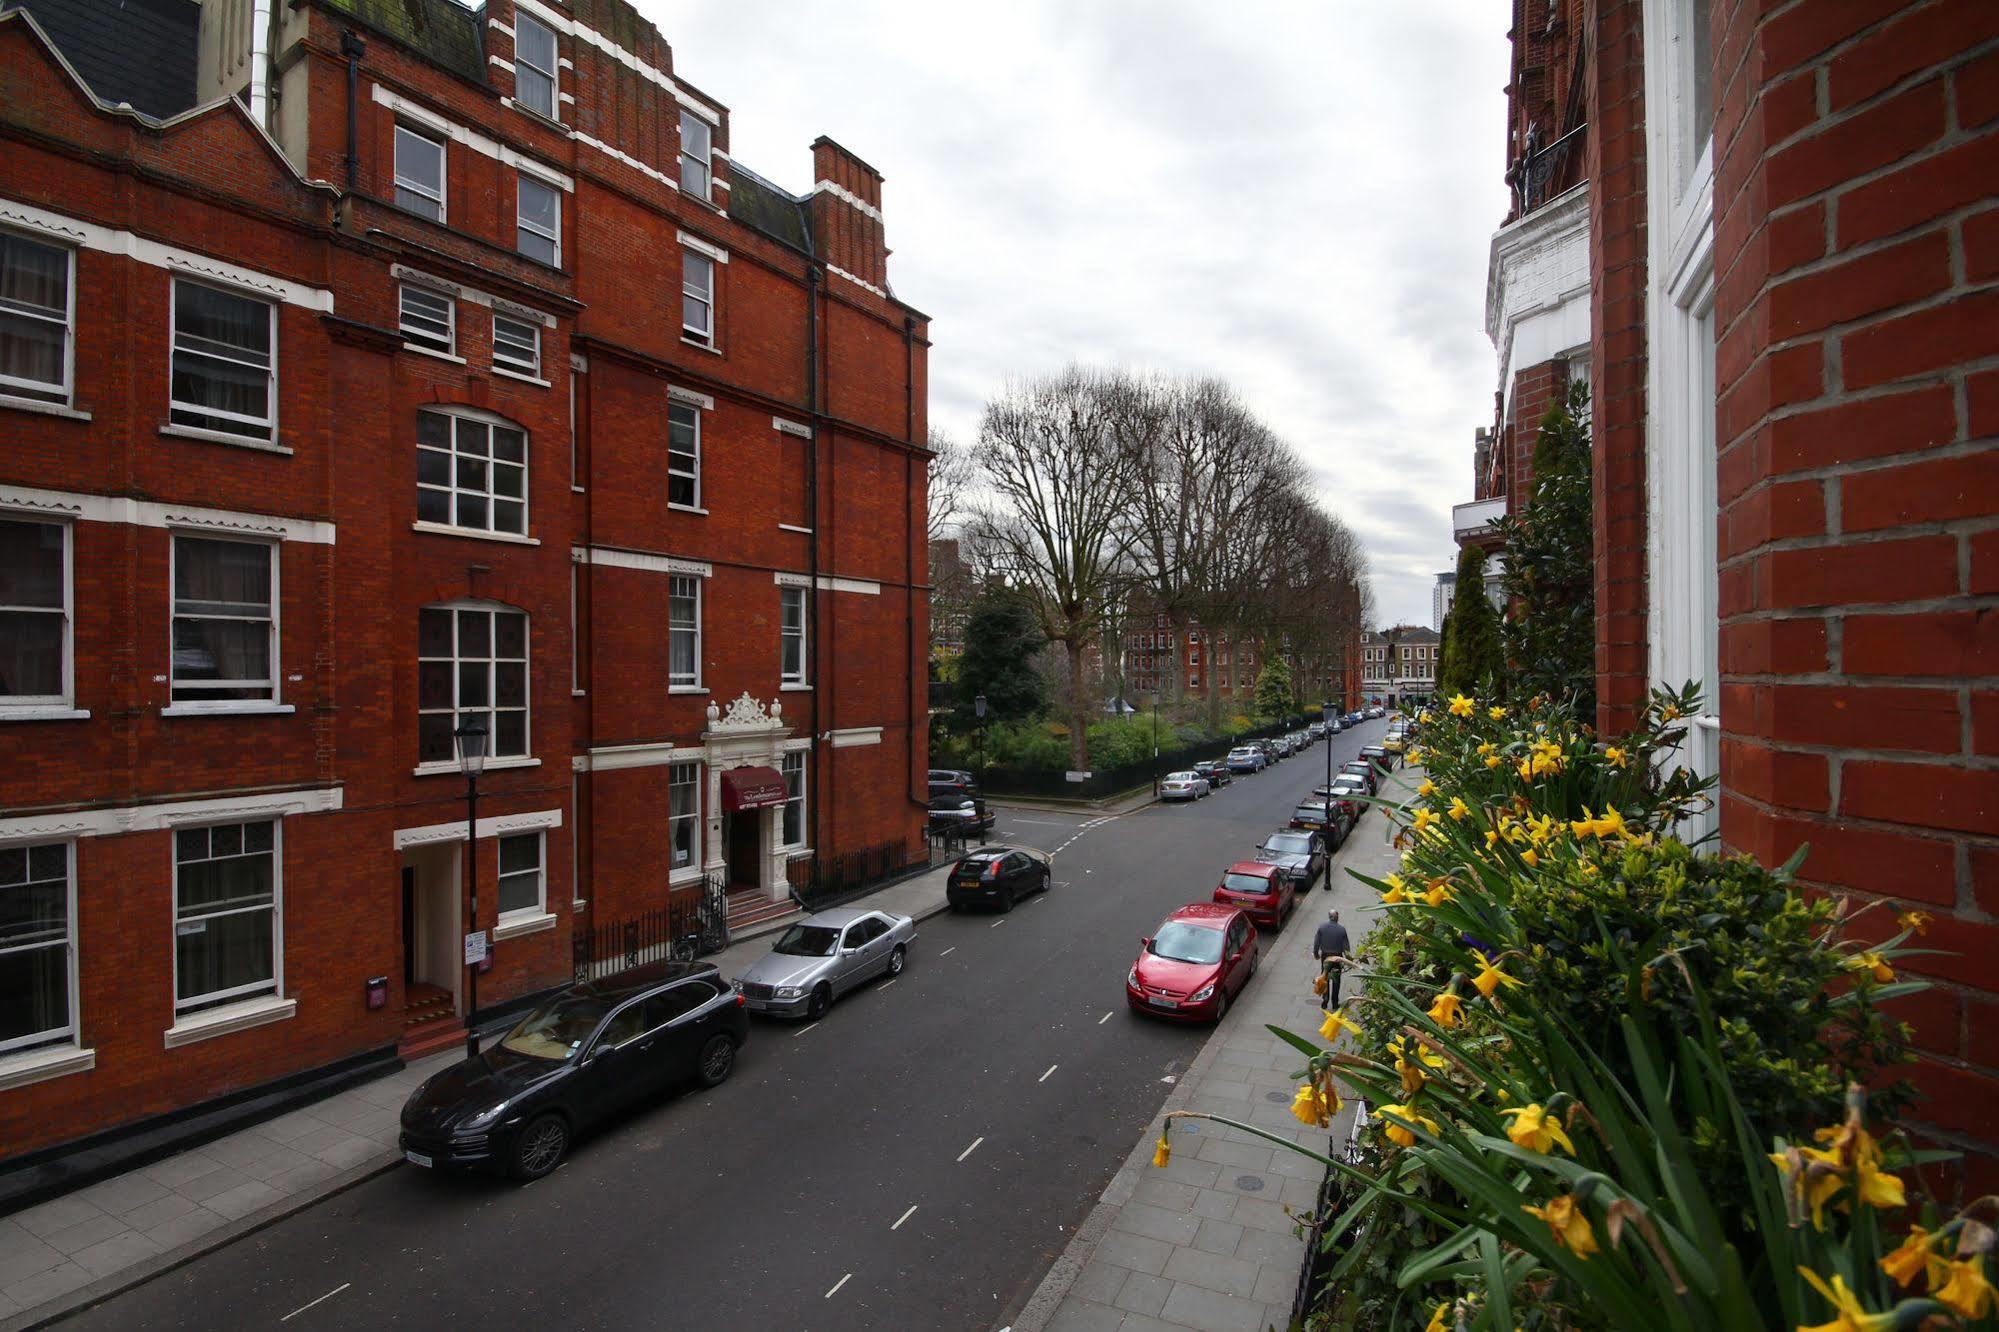 St Mark Hotel London Exterior photo